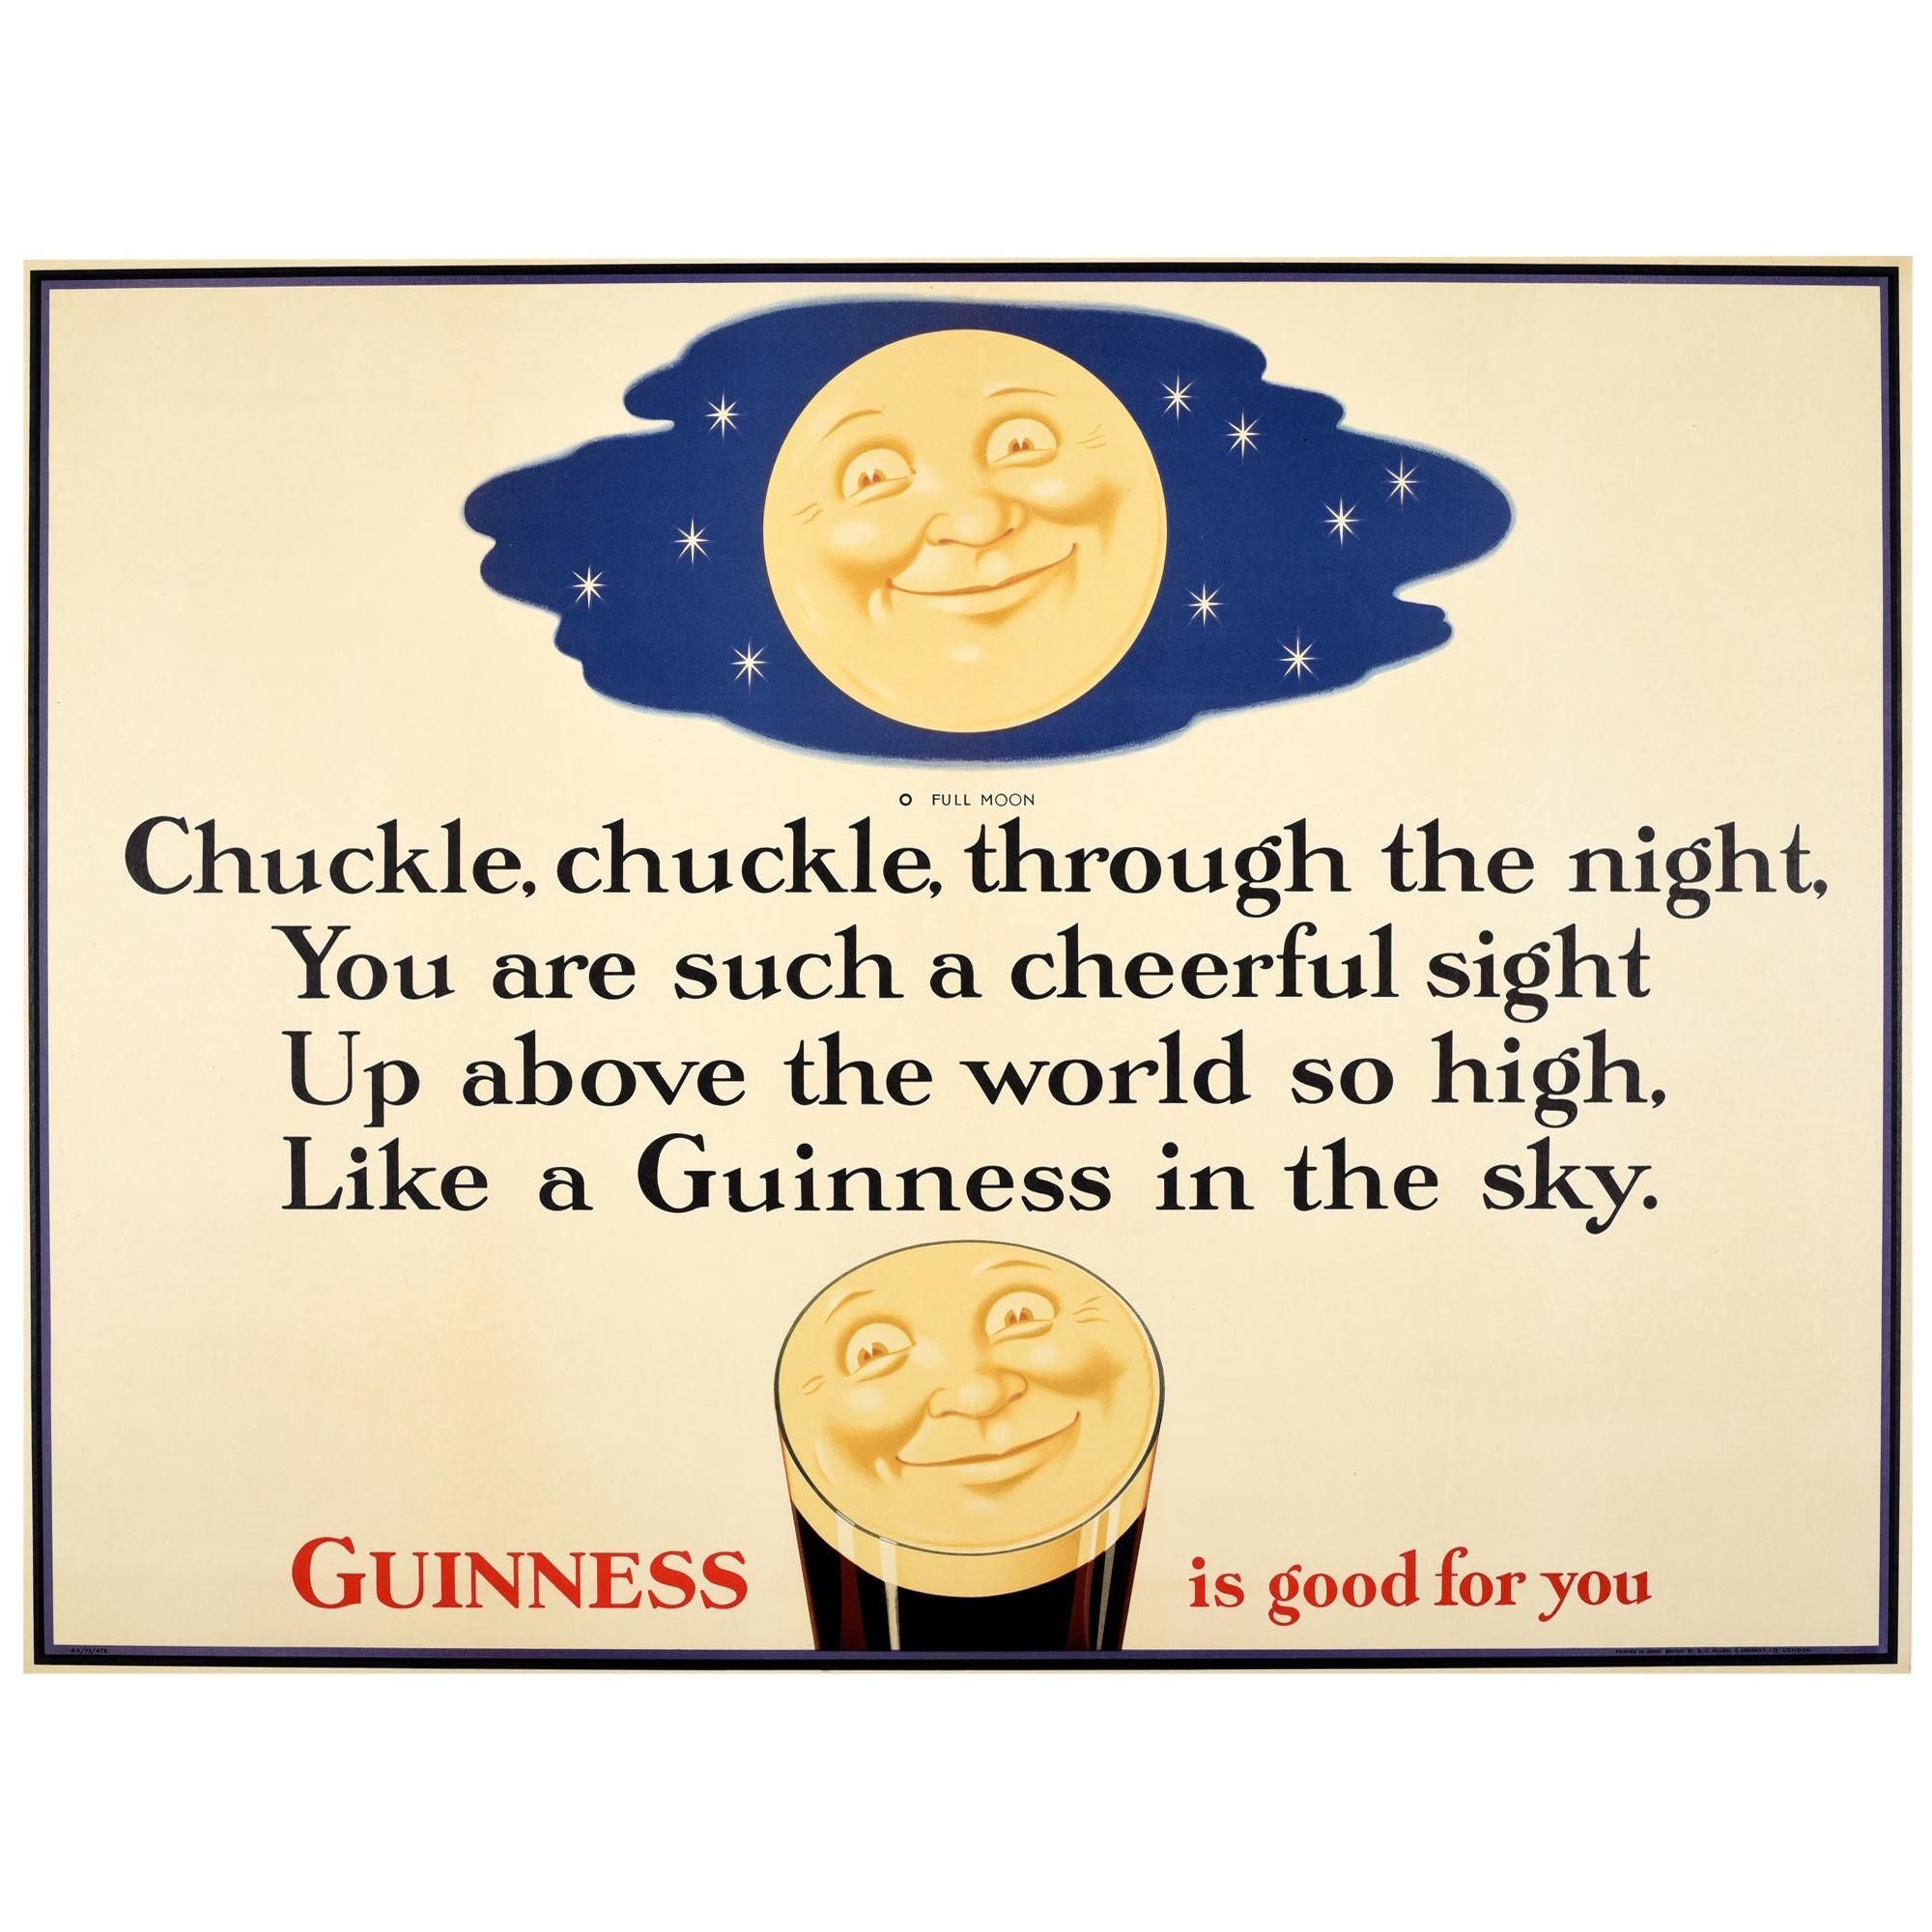 Original Vintage Guinness Is Good For You Poster Full Moon Design Beer Drink Ad